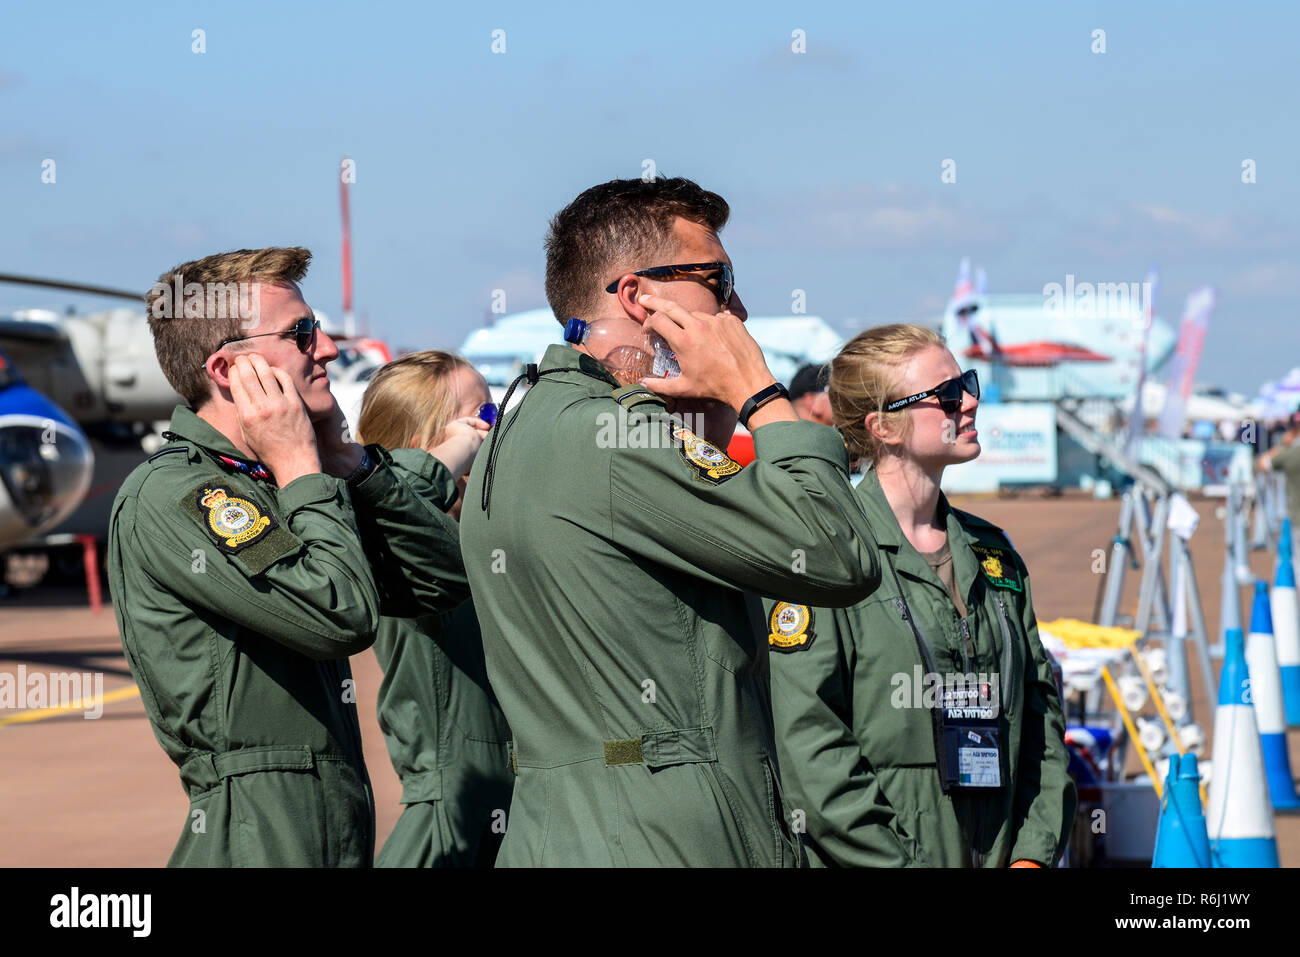 RAF, Royal Air Force Crew, Personal beobachtet die Flugschau bei Royal International Air Tattoo, RIAT, RAF Fairford Airshow. Finger im Ohr Stockfoto